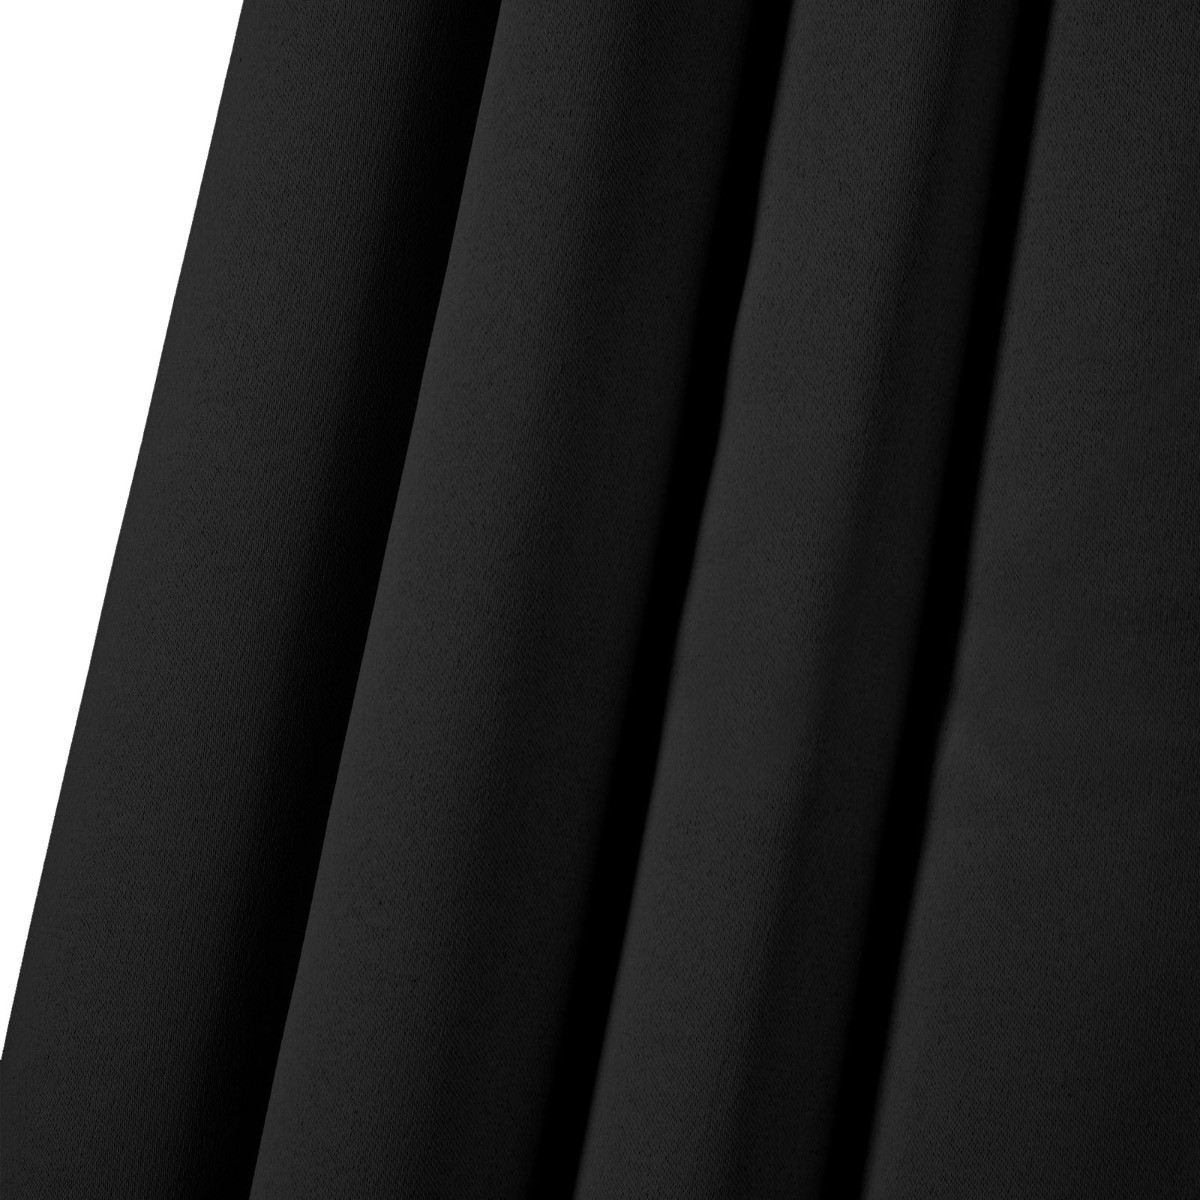 Dreamscene Pencil Pleat Thermal Blackout Curtains - Black, 66" x 72">